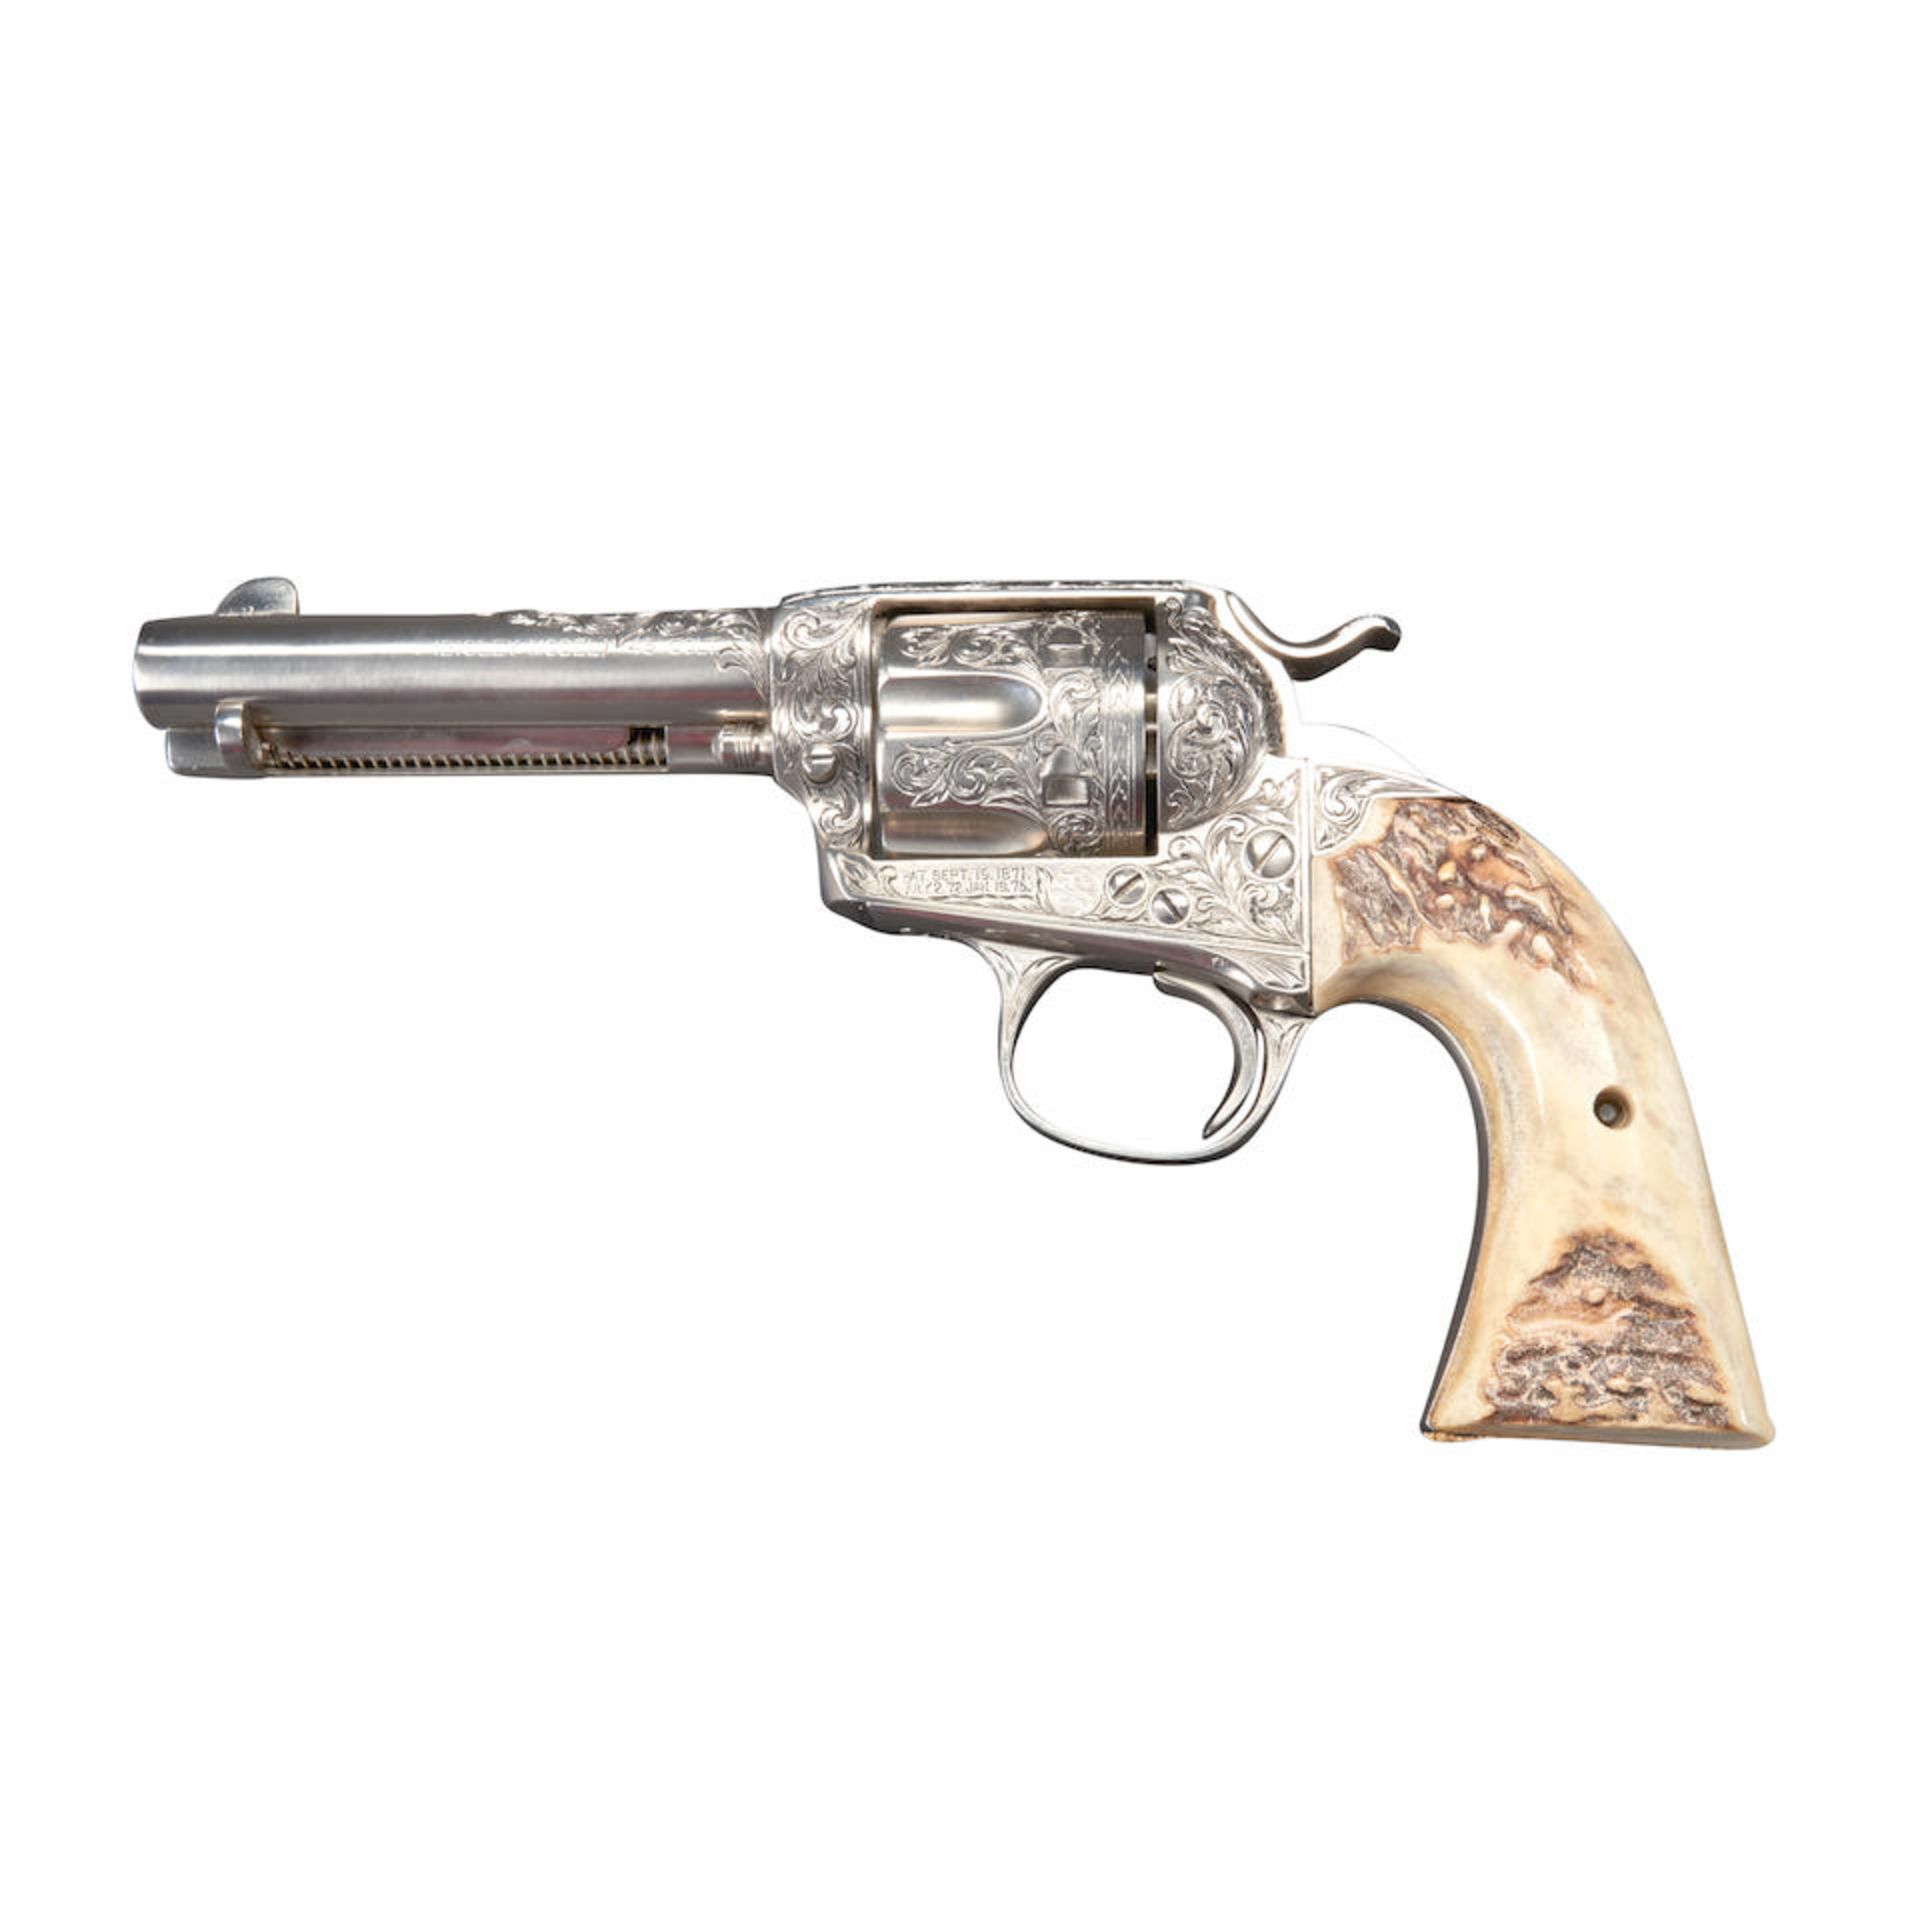 Ben Shostle Engraved Colt Bisley Single Action Revolver, Curio or Relic firearm - Bild 3 aus 4